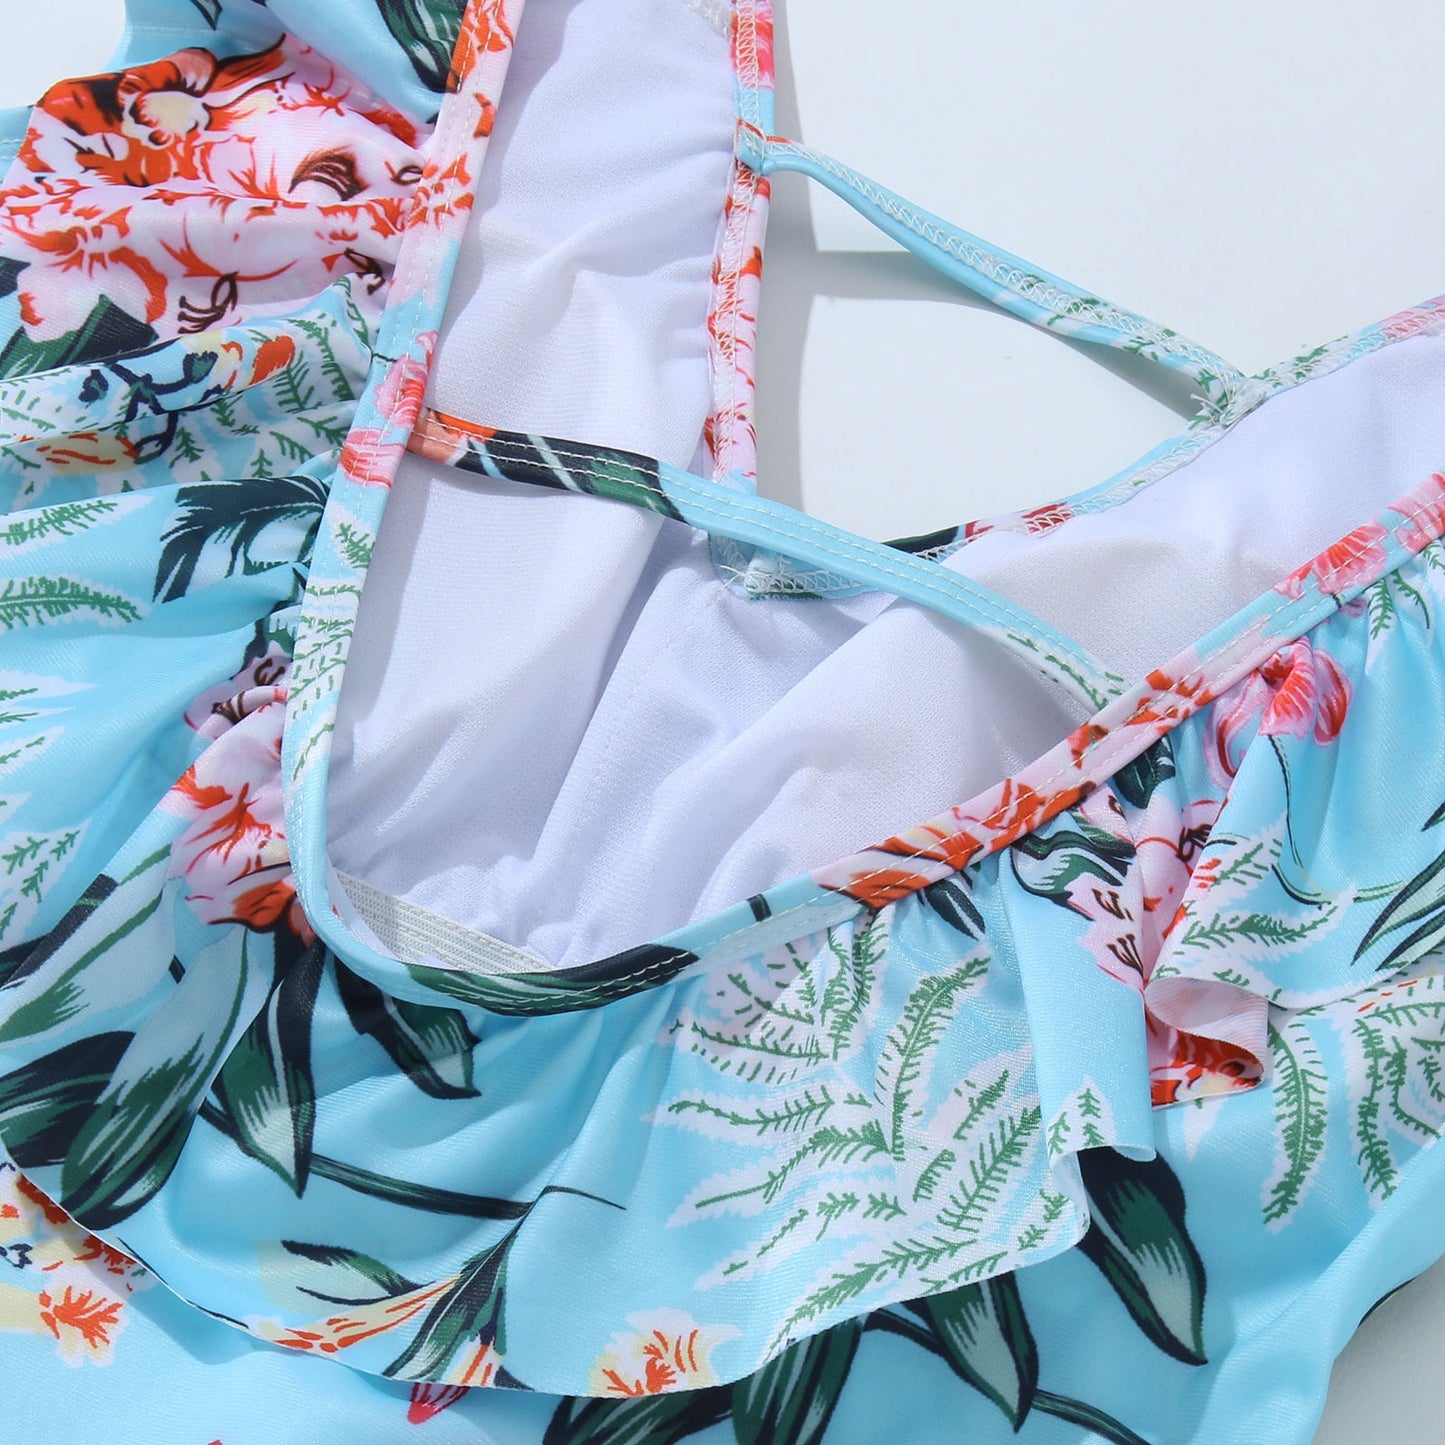 "Sea You Soon" Leaf Floral Print Matching Family Swimwear